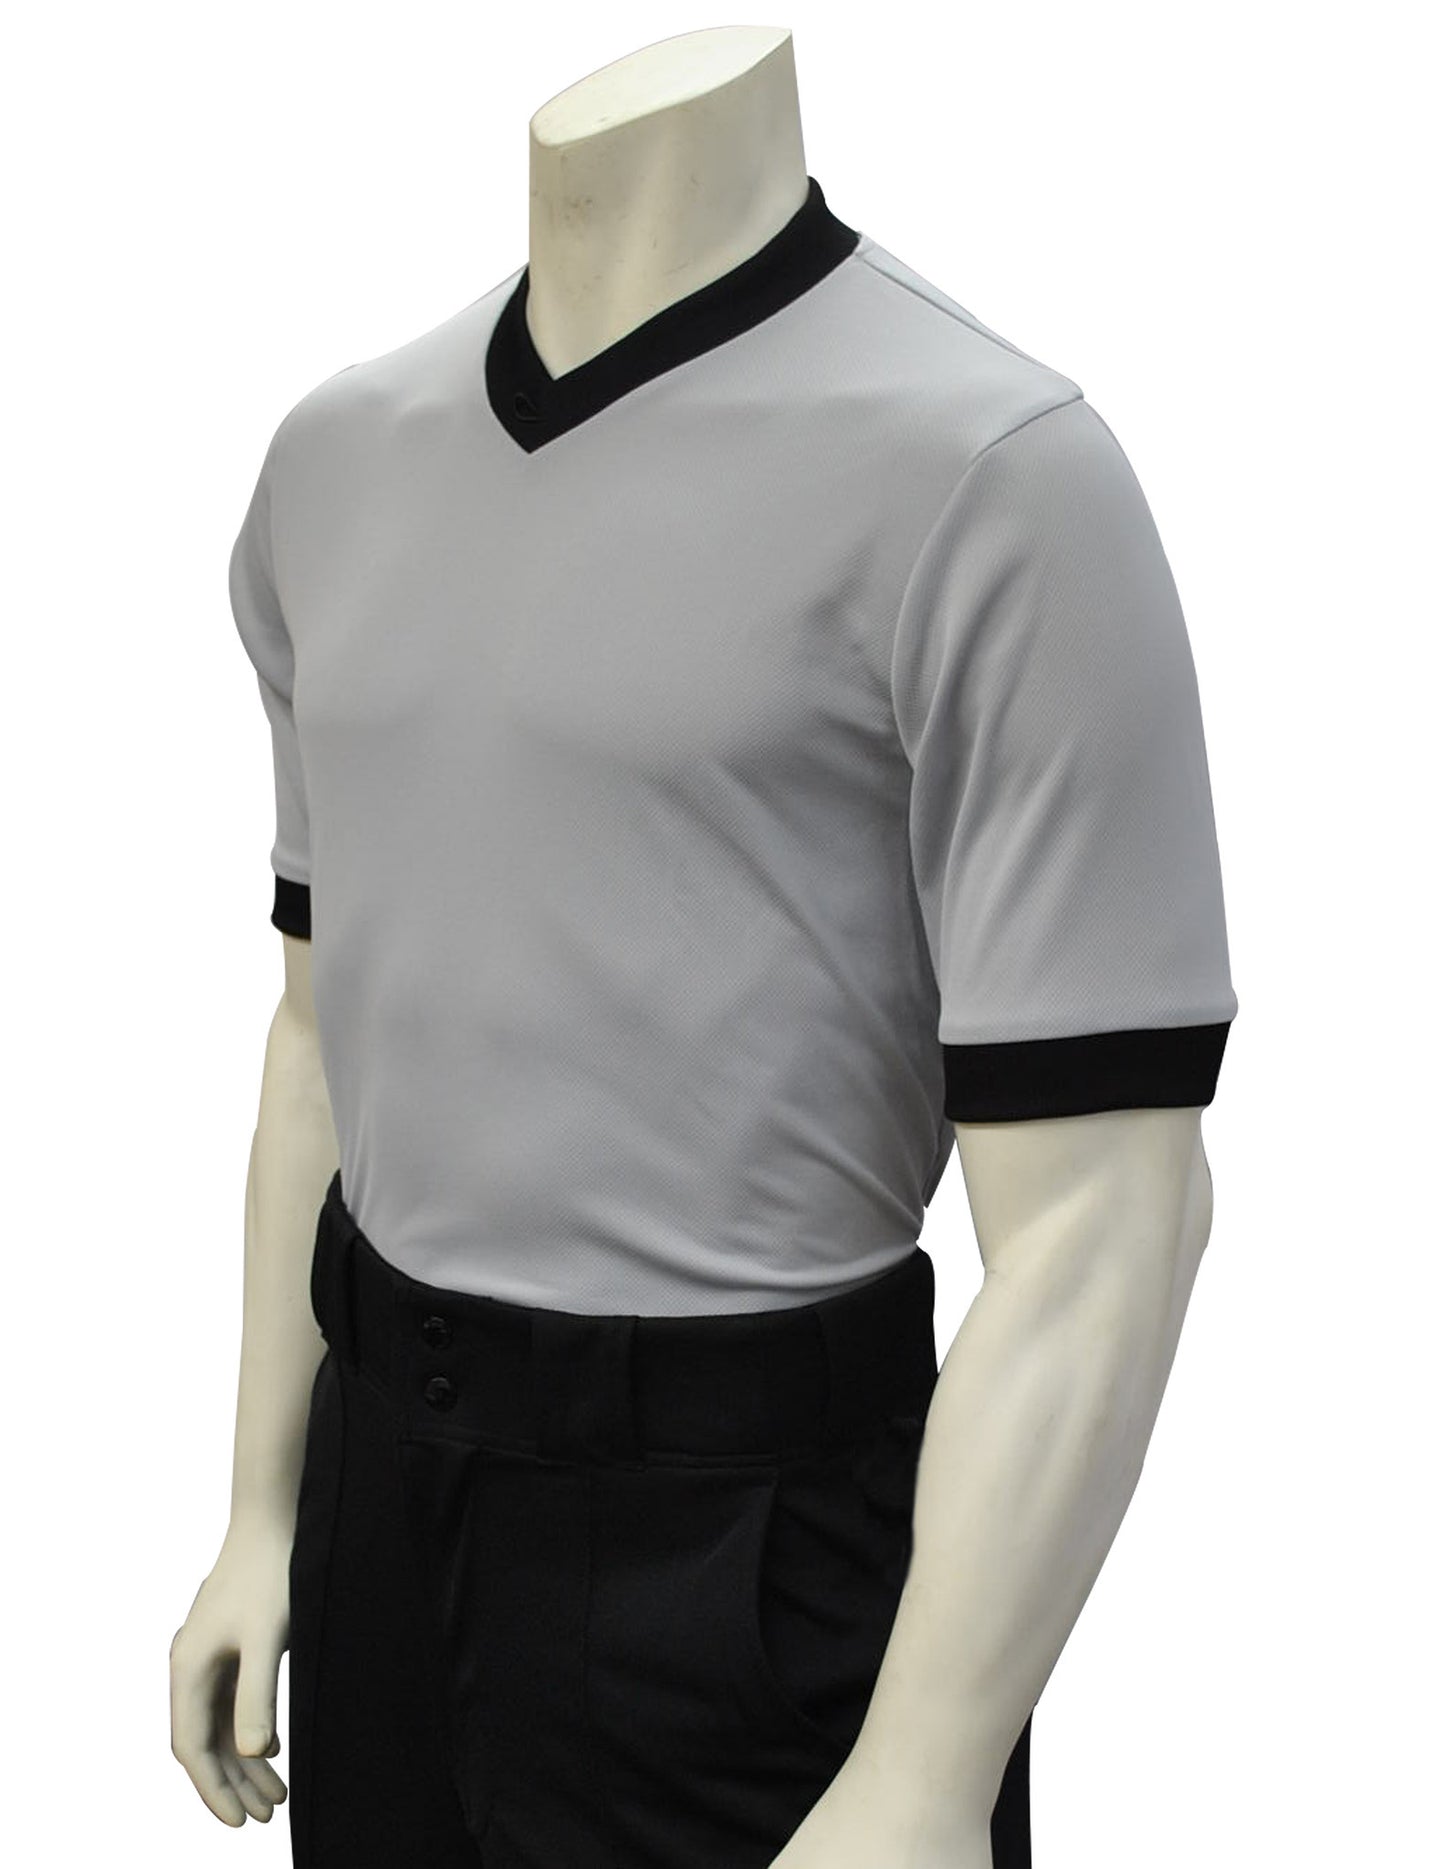 USA218- Smitty USA - Solid Grey Mesh V-Neck Shirt w/ Black Collar and Sleeve Ends